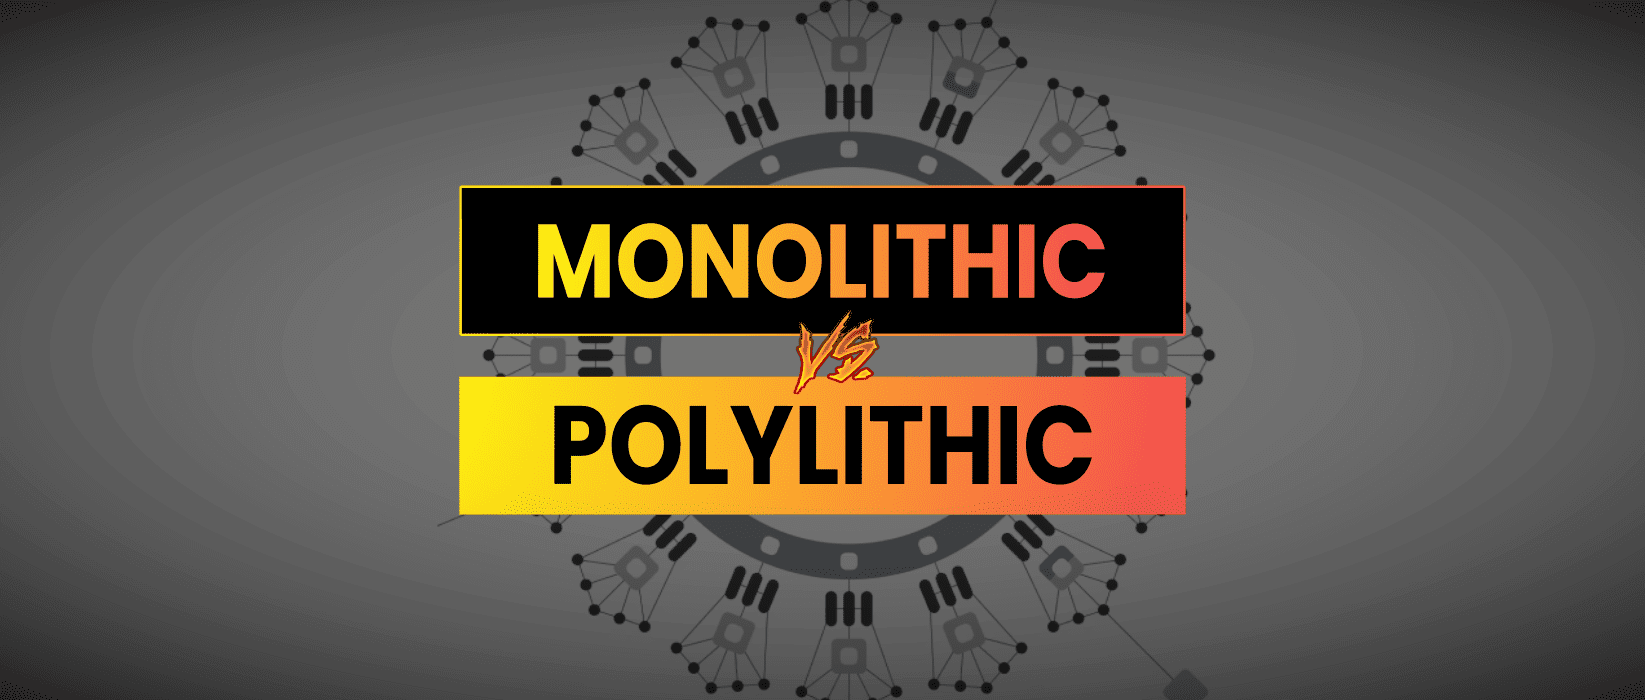 monolithic vs polylithic